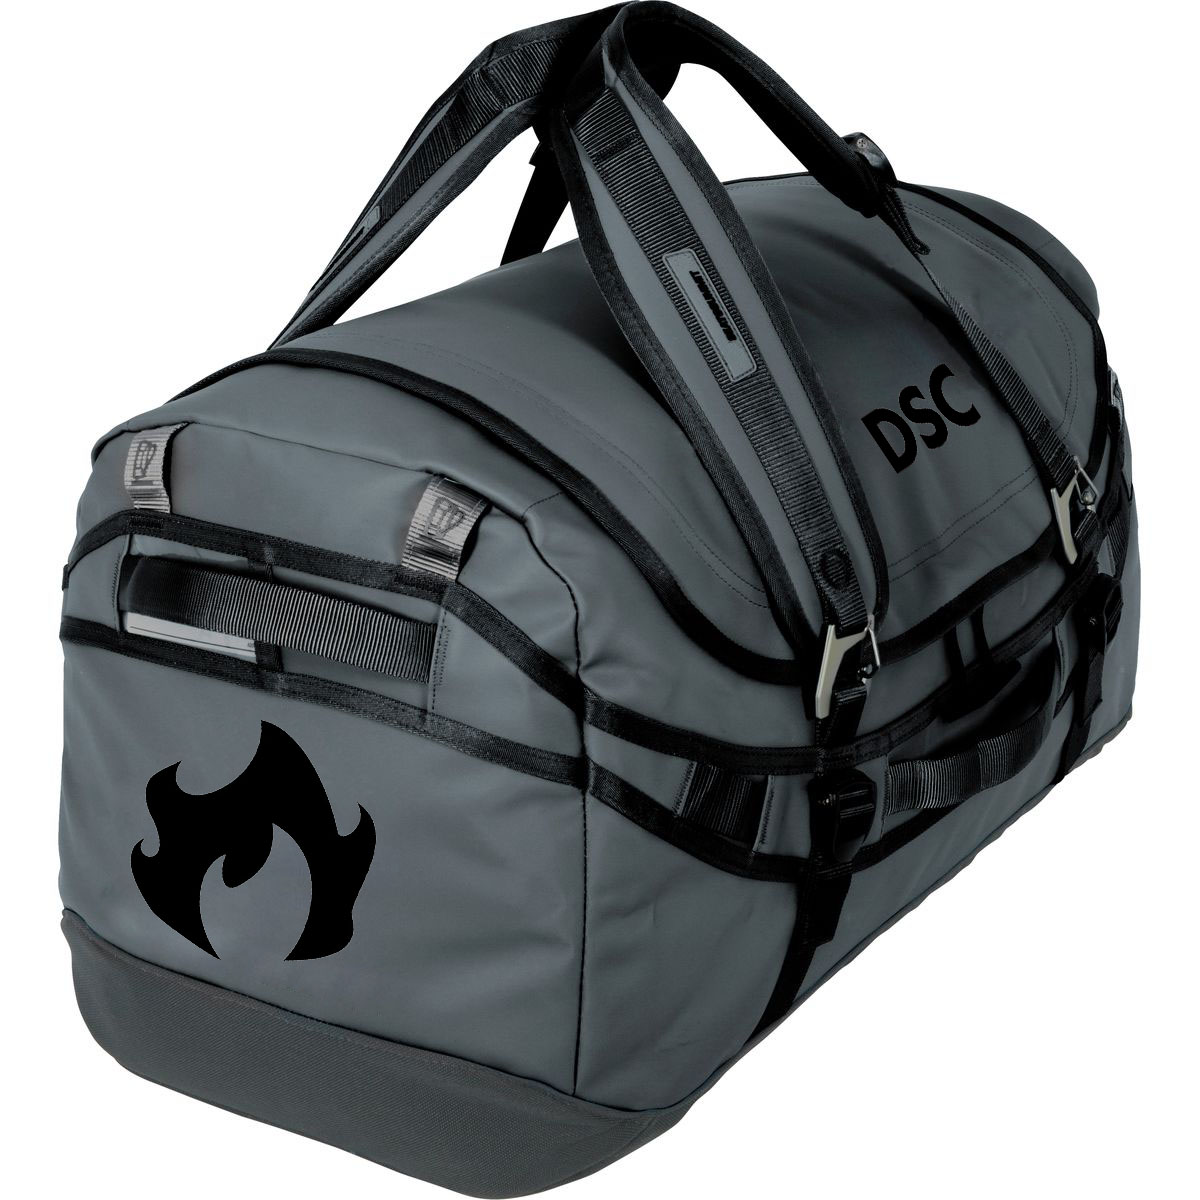 High Quality Waterproof Weekender Travel Duffel Sport Bag for Travel Sport Gym Journey for Men Women